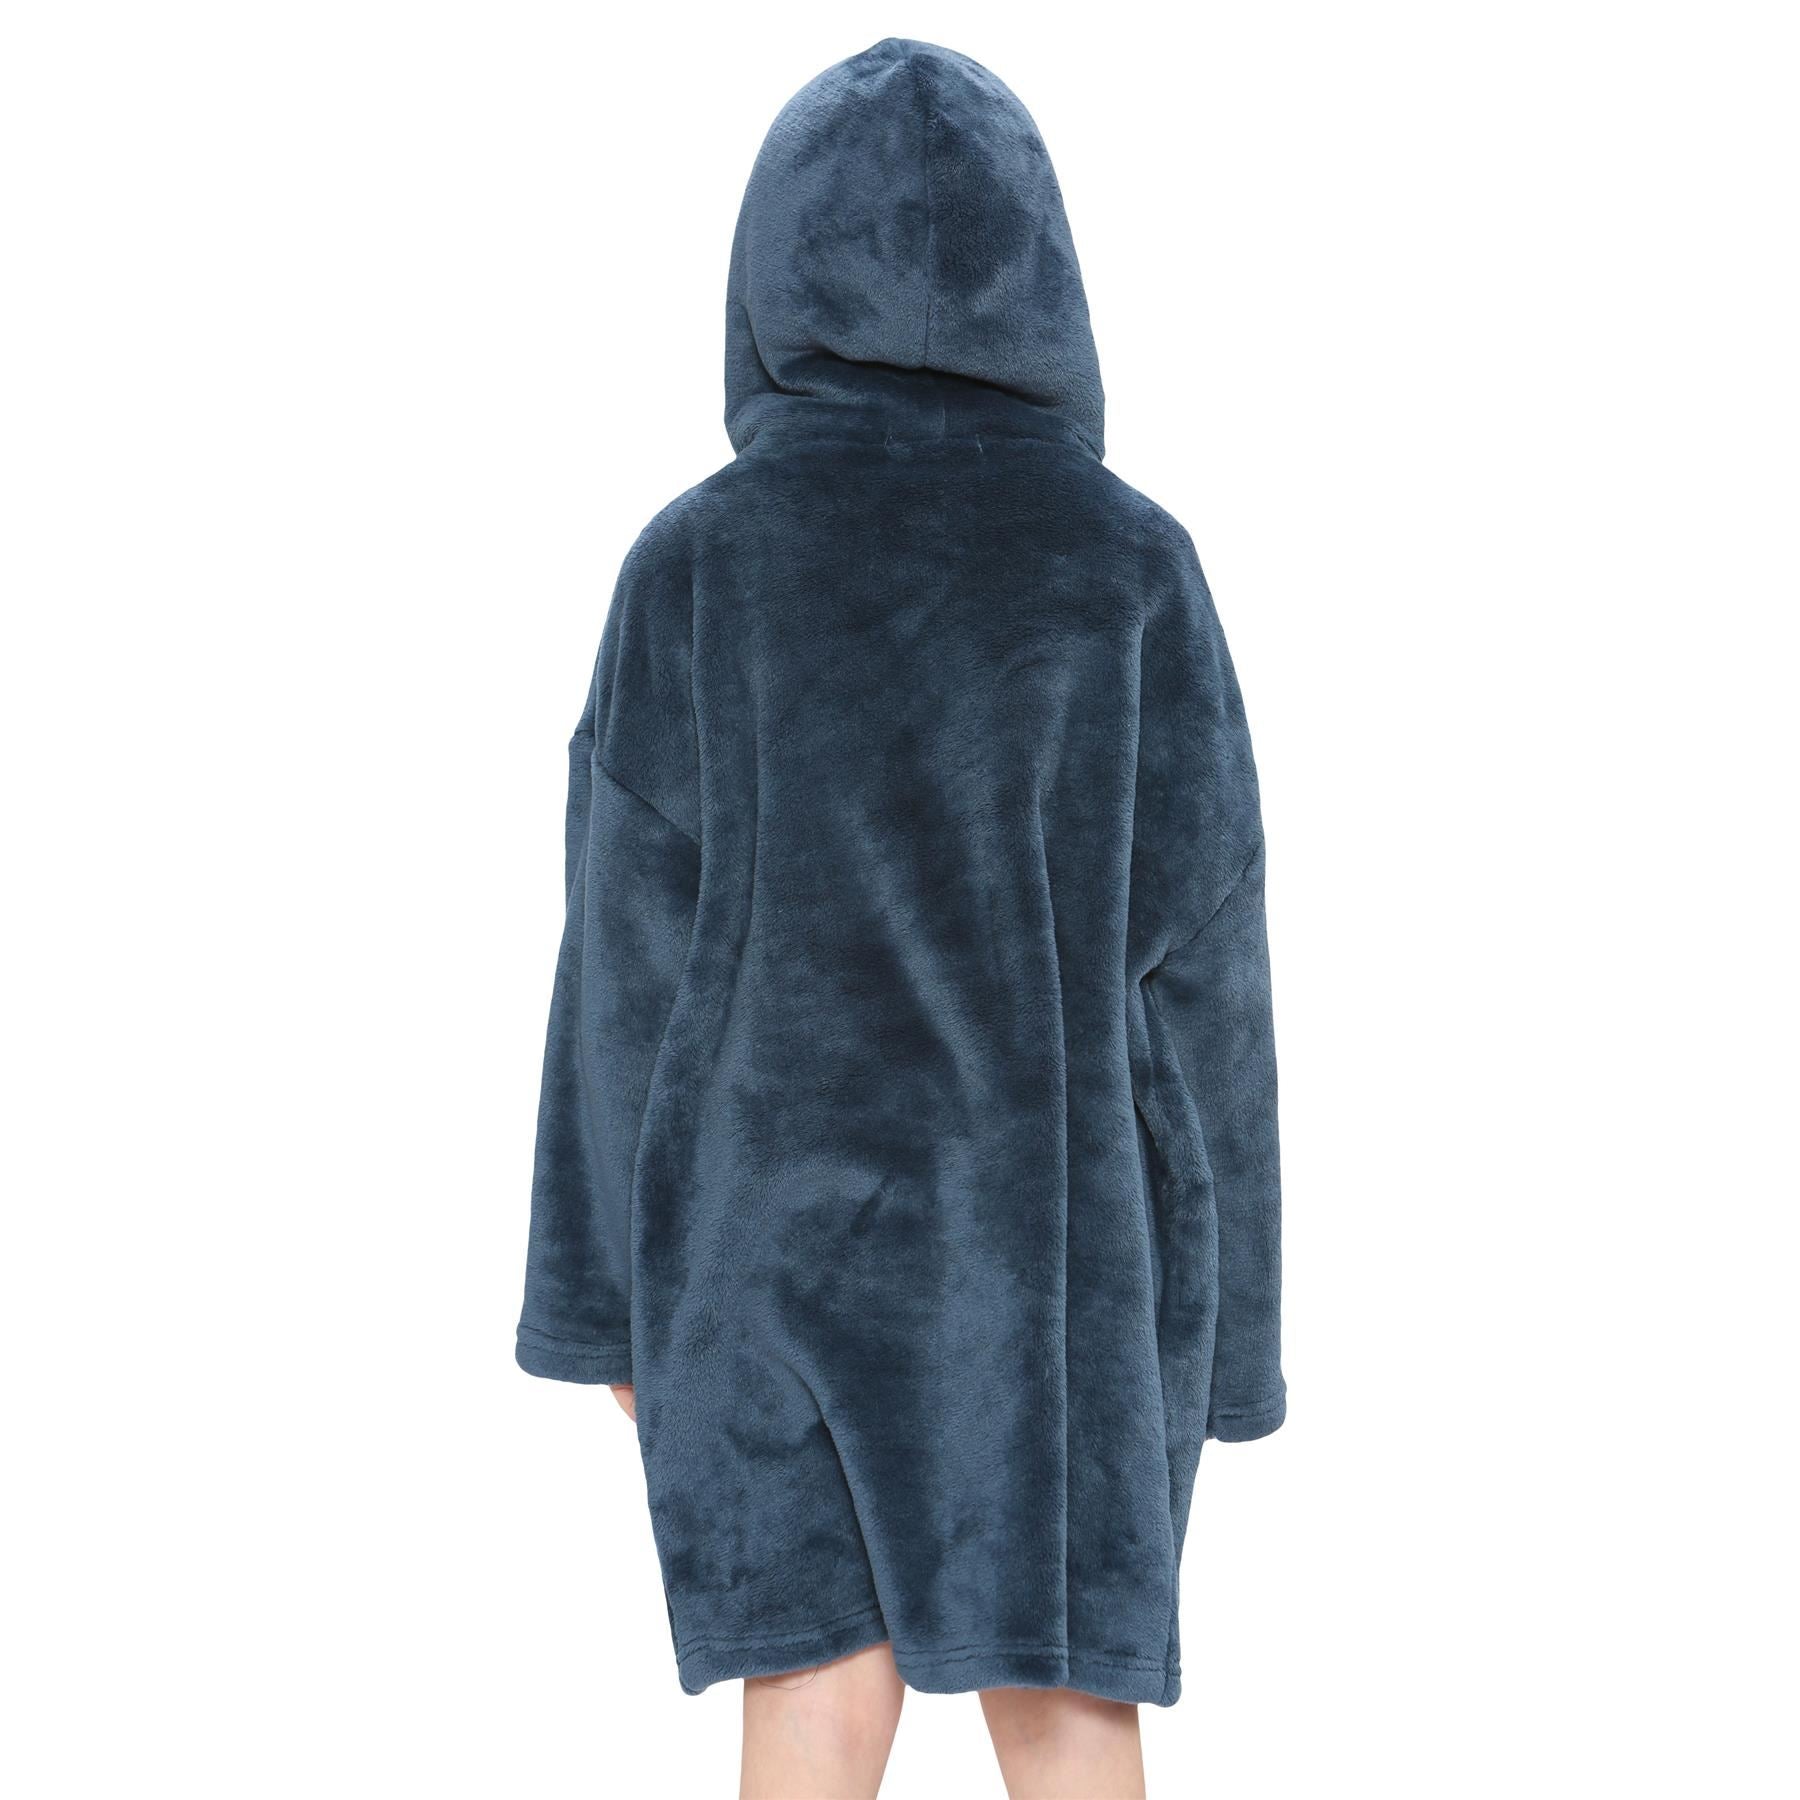 Kids Unisex Oversized Hoodie Navy Snuggle Blanket Super Soft Warm Fleece